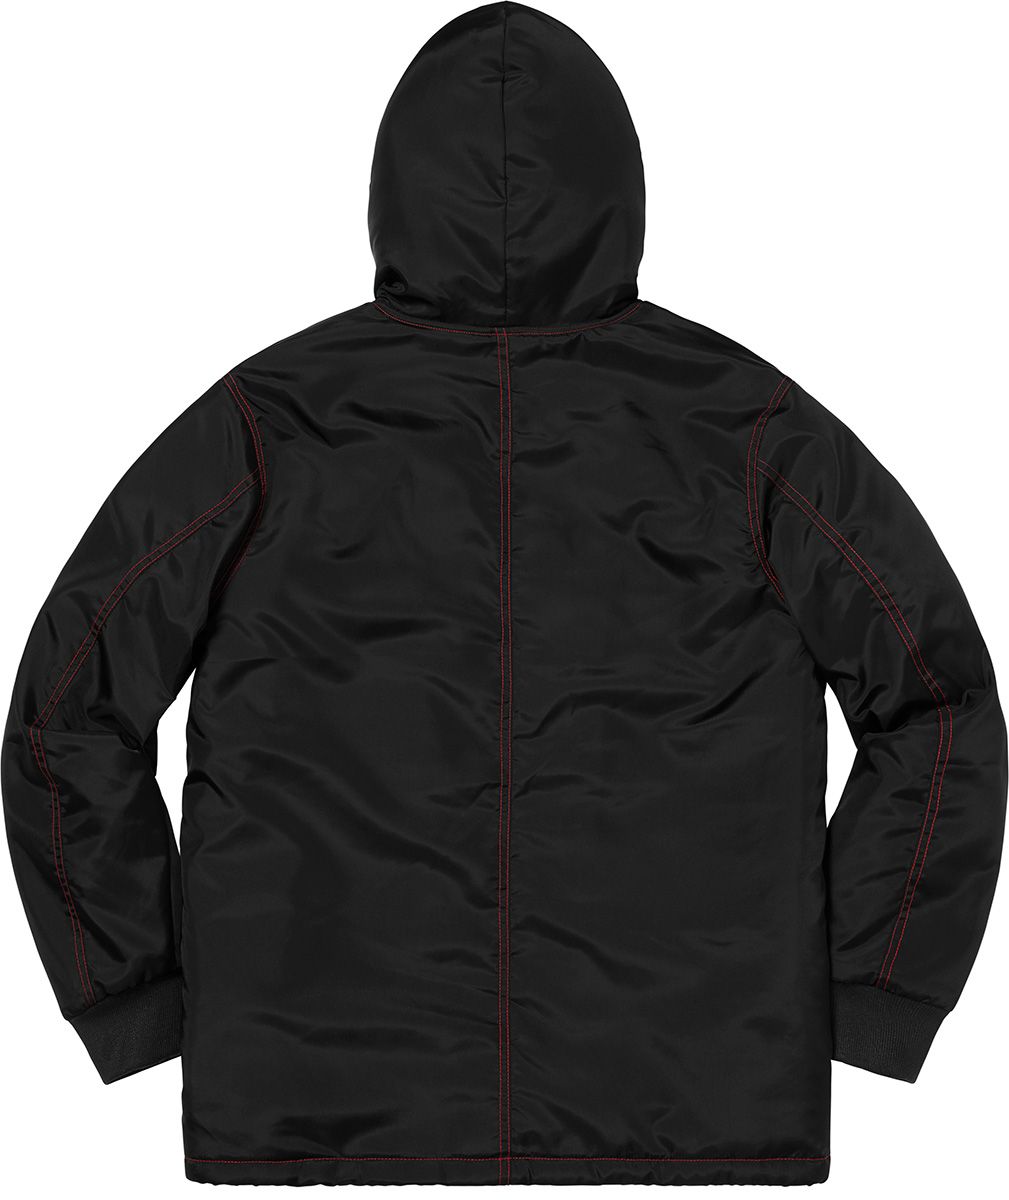 Sherpa Lined Nylon Zip Up Jacket - Supreme